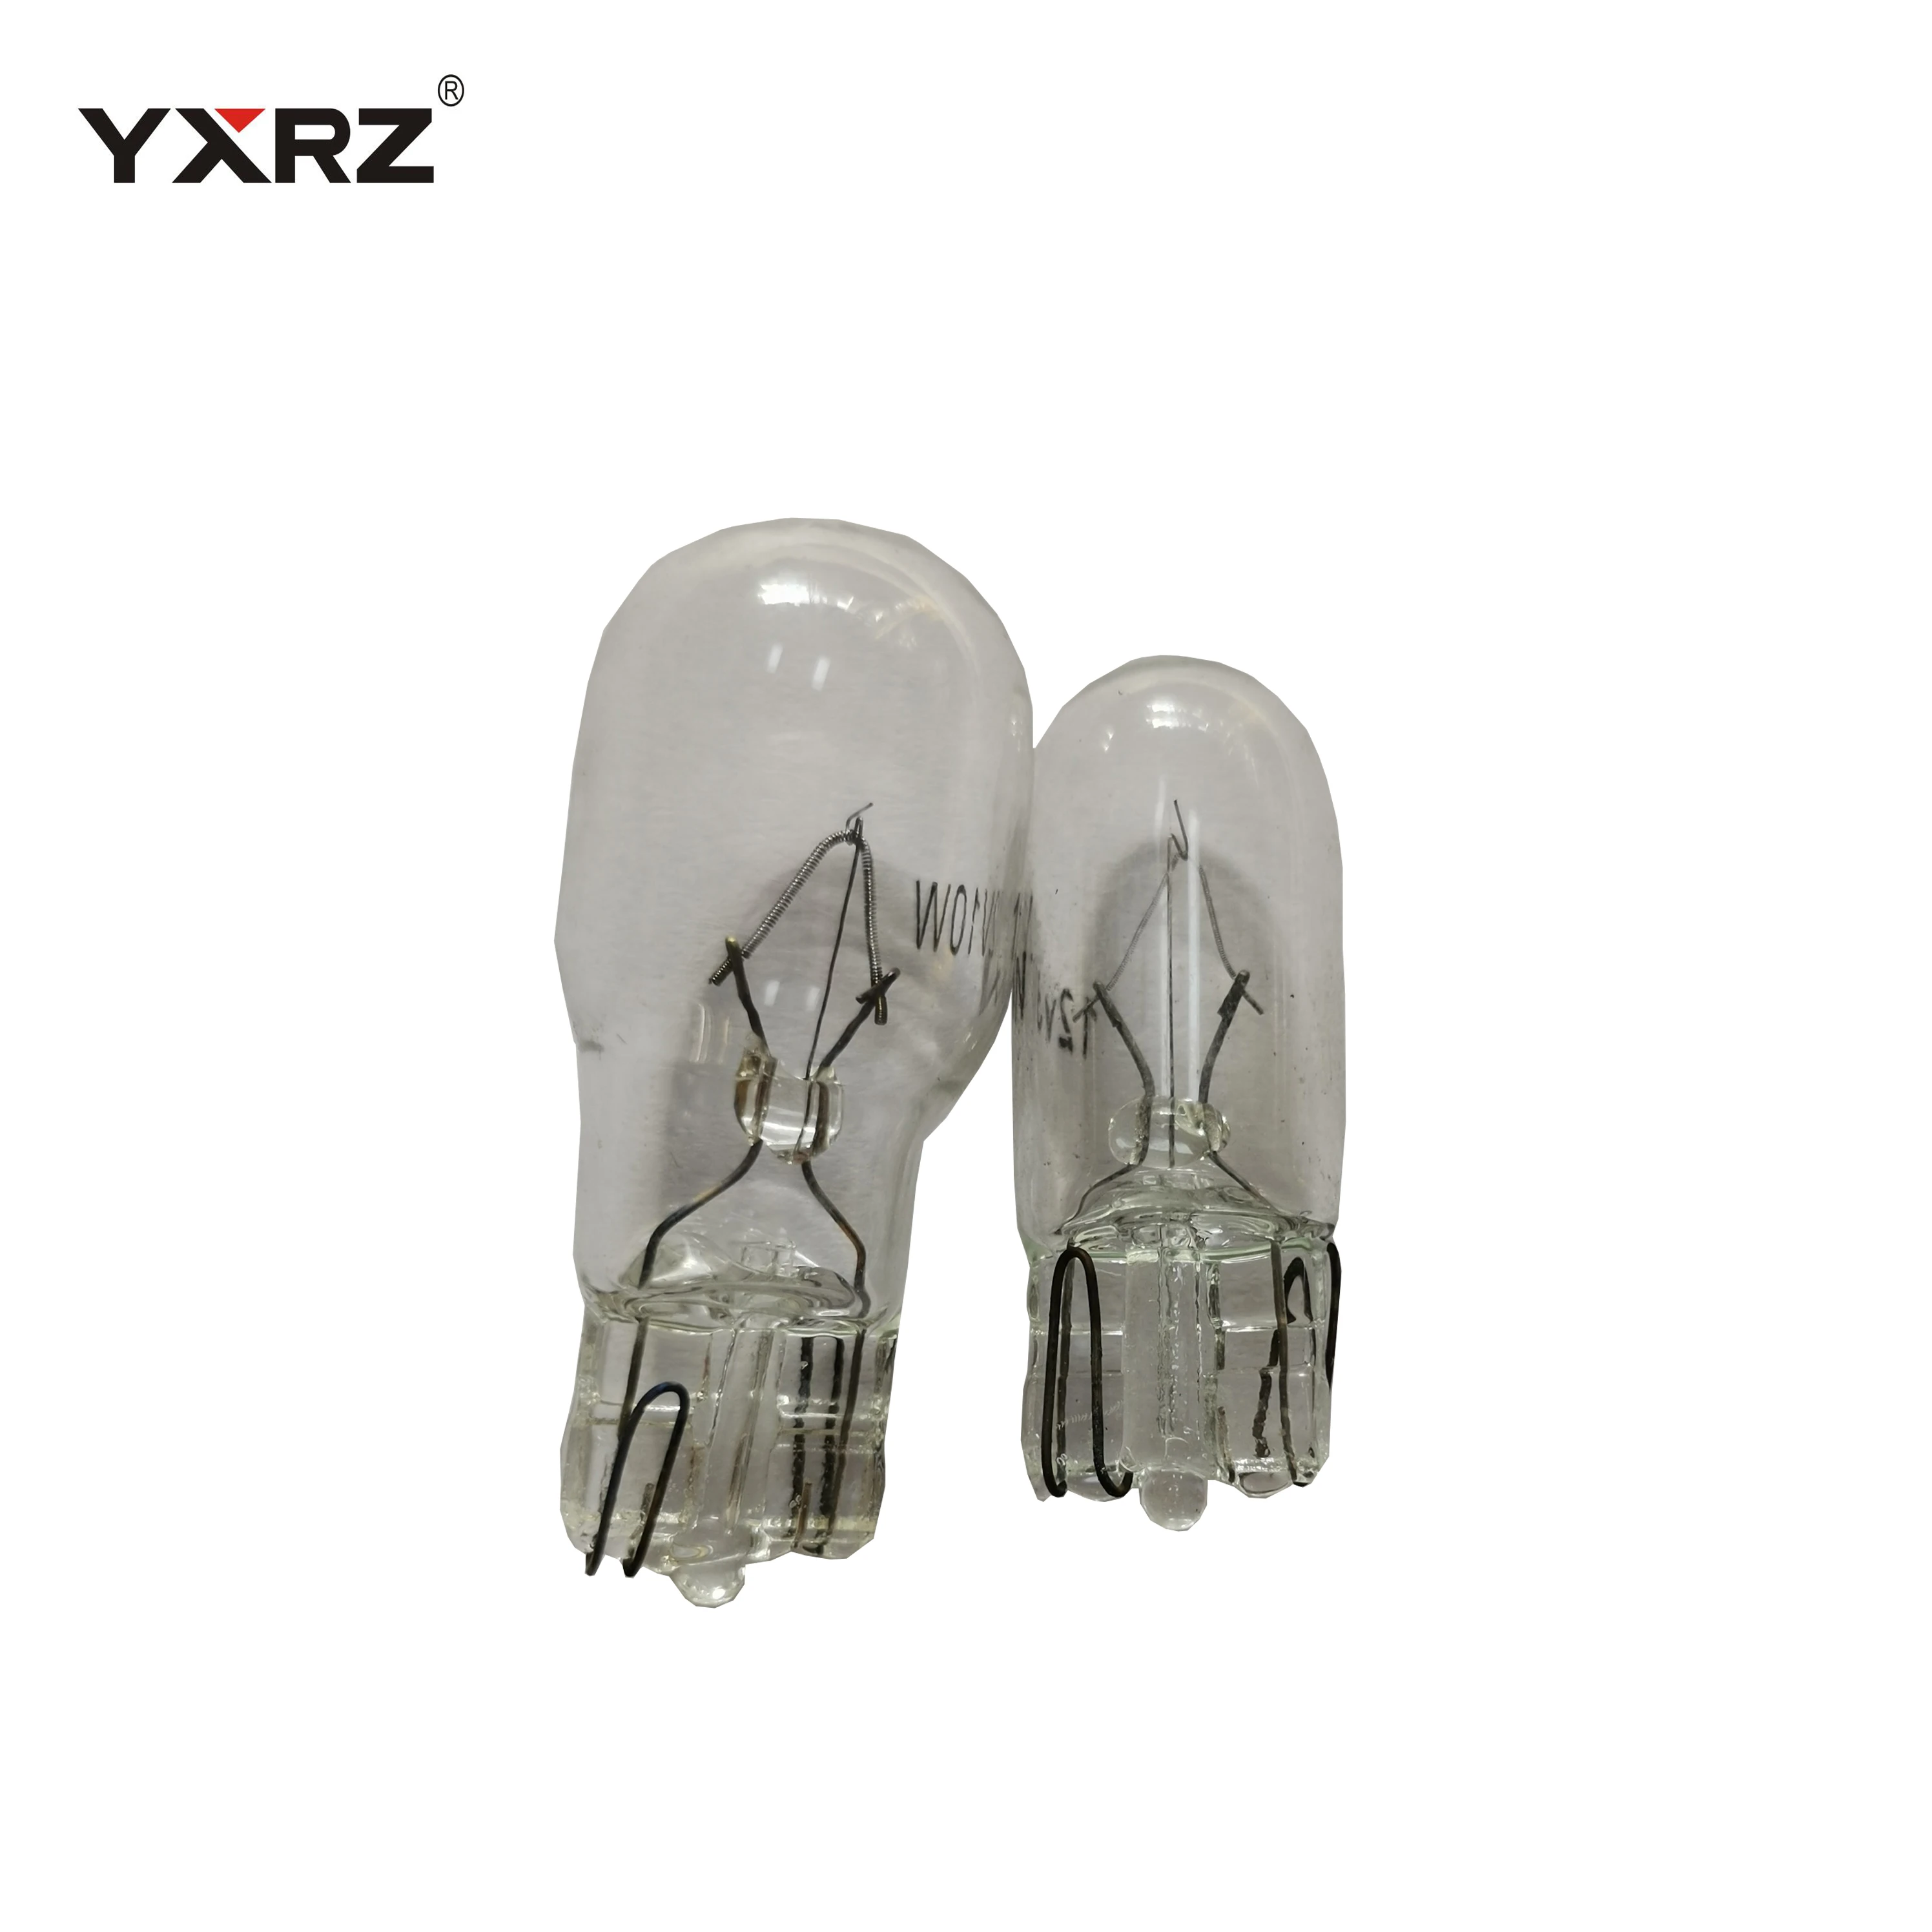 Universal glass auto lighting 12V 3W 10W high brightest motorcycle T13 T10 halogen indicator light bulbs